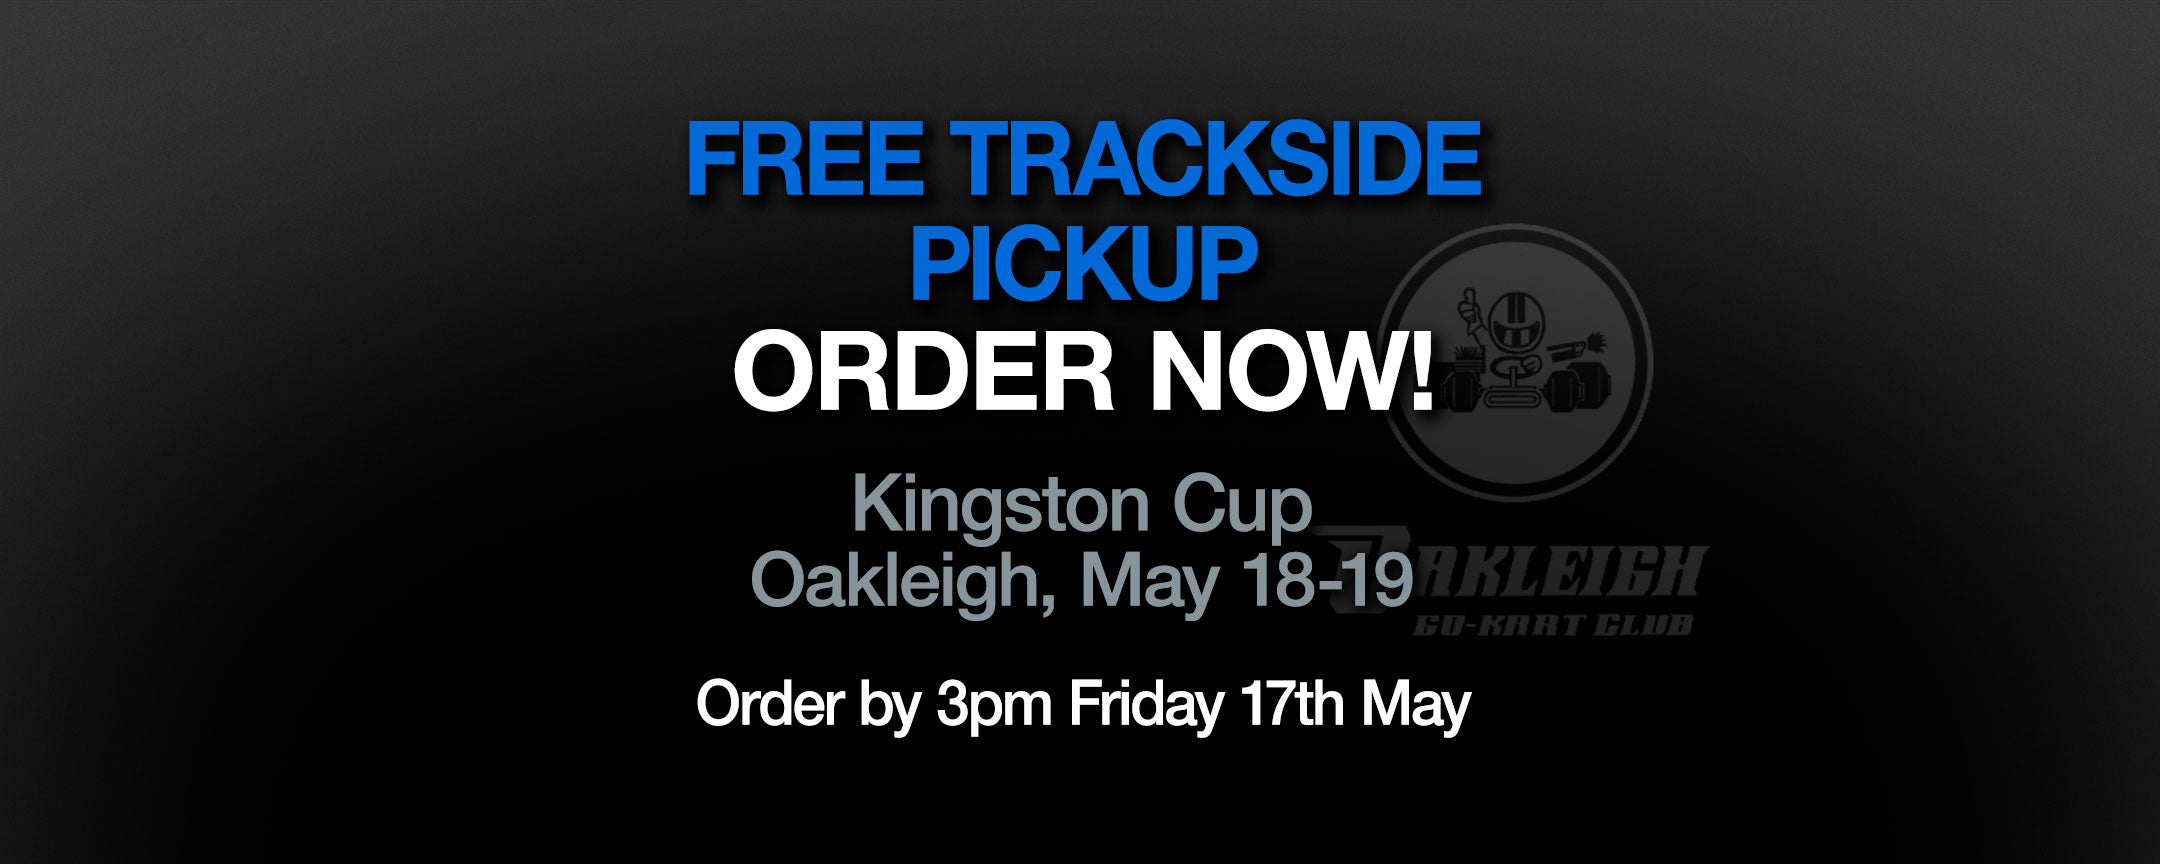 Online Order Free Trackside Pickup at Kingston Cup